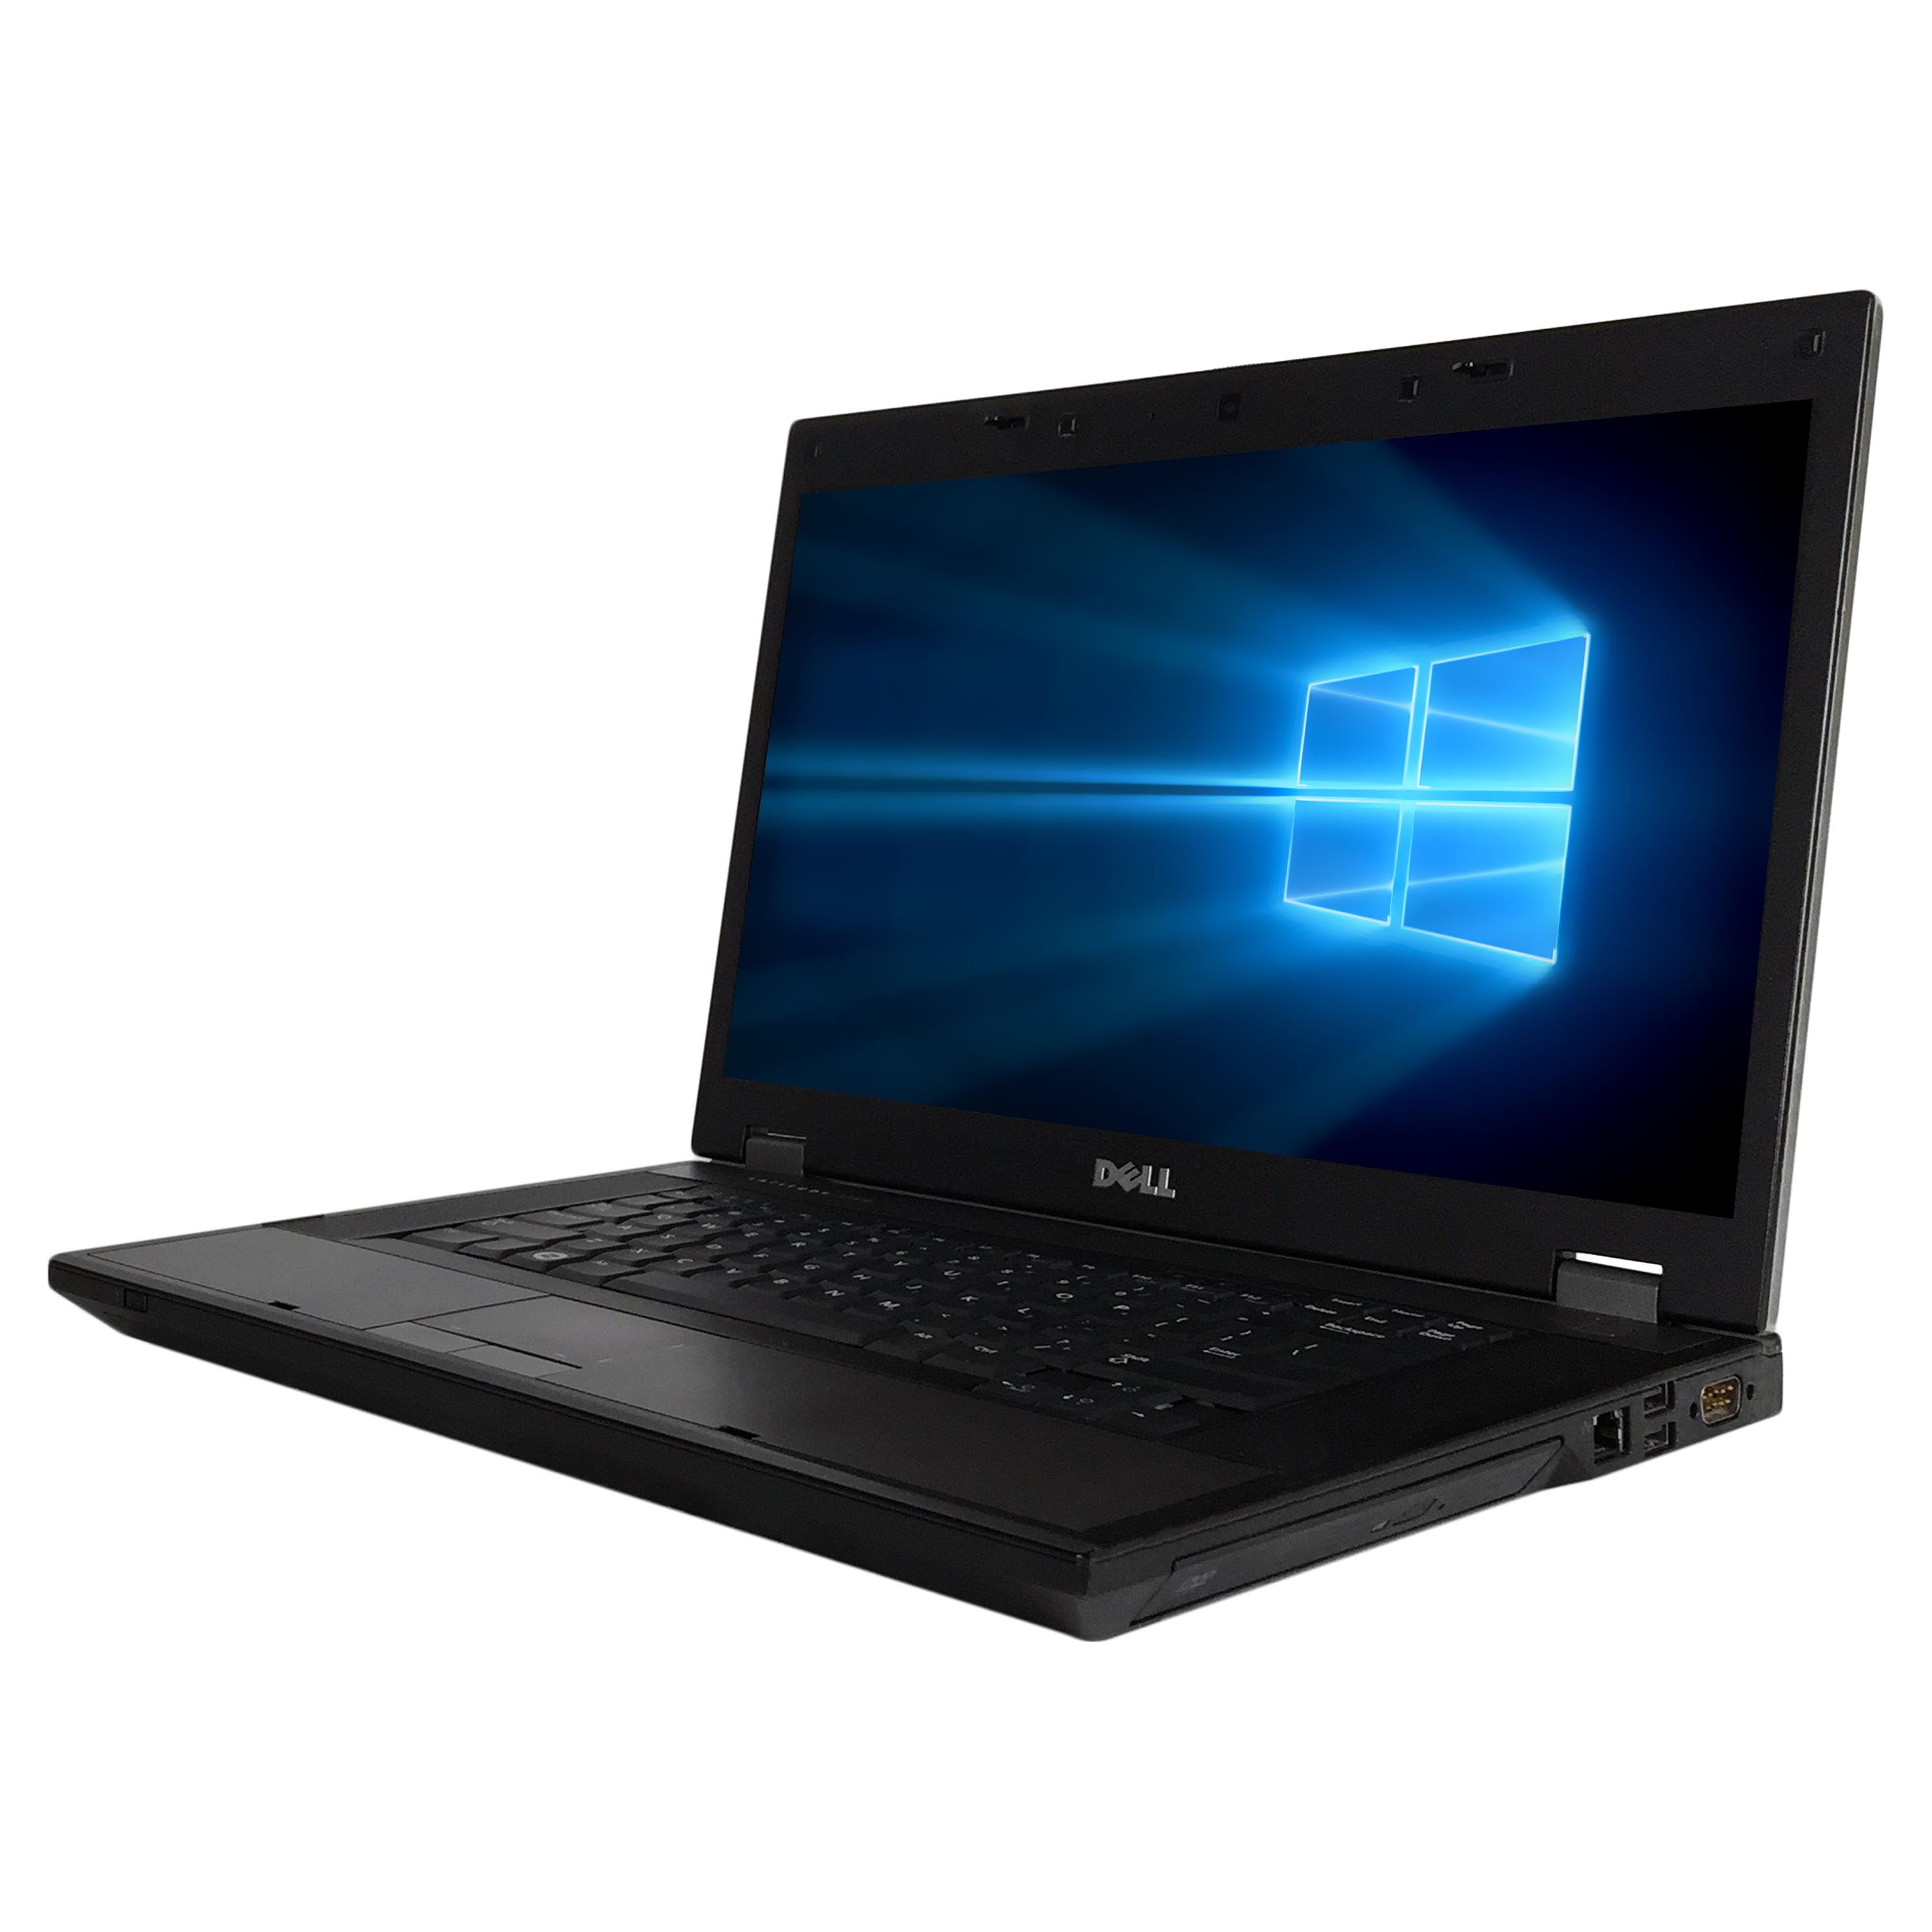 Refurbished Dell Latitude E5510 Laptop B Grade Intel I3 Dual Core Gen 1 4gb Ram 250gb Sata Windows 10 Home 64 Bit Walmart Com Walmart Com